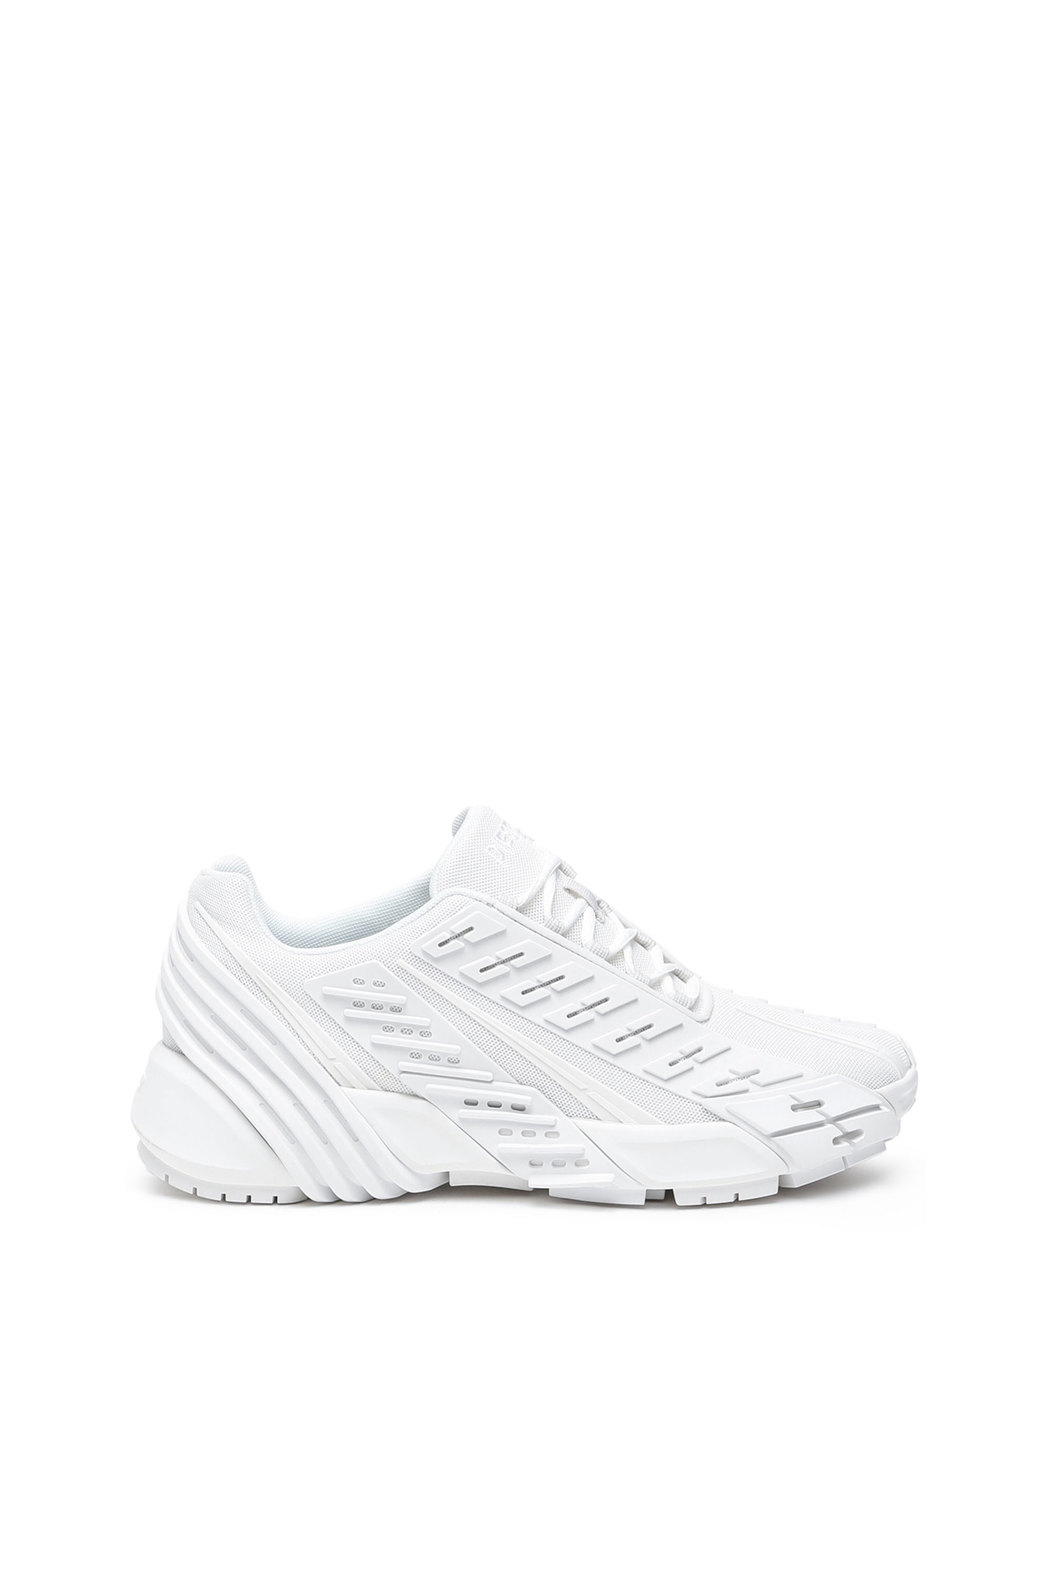 Diesel Sneakers - PROTOTYPE S-PROTOTYPE LOW SNEA white